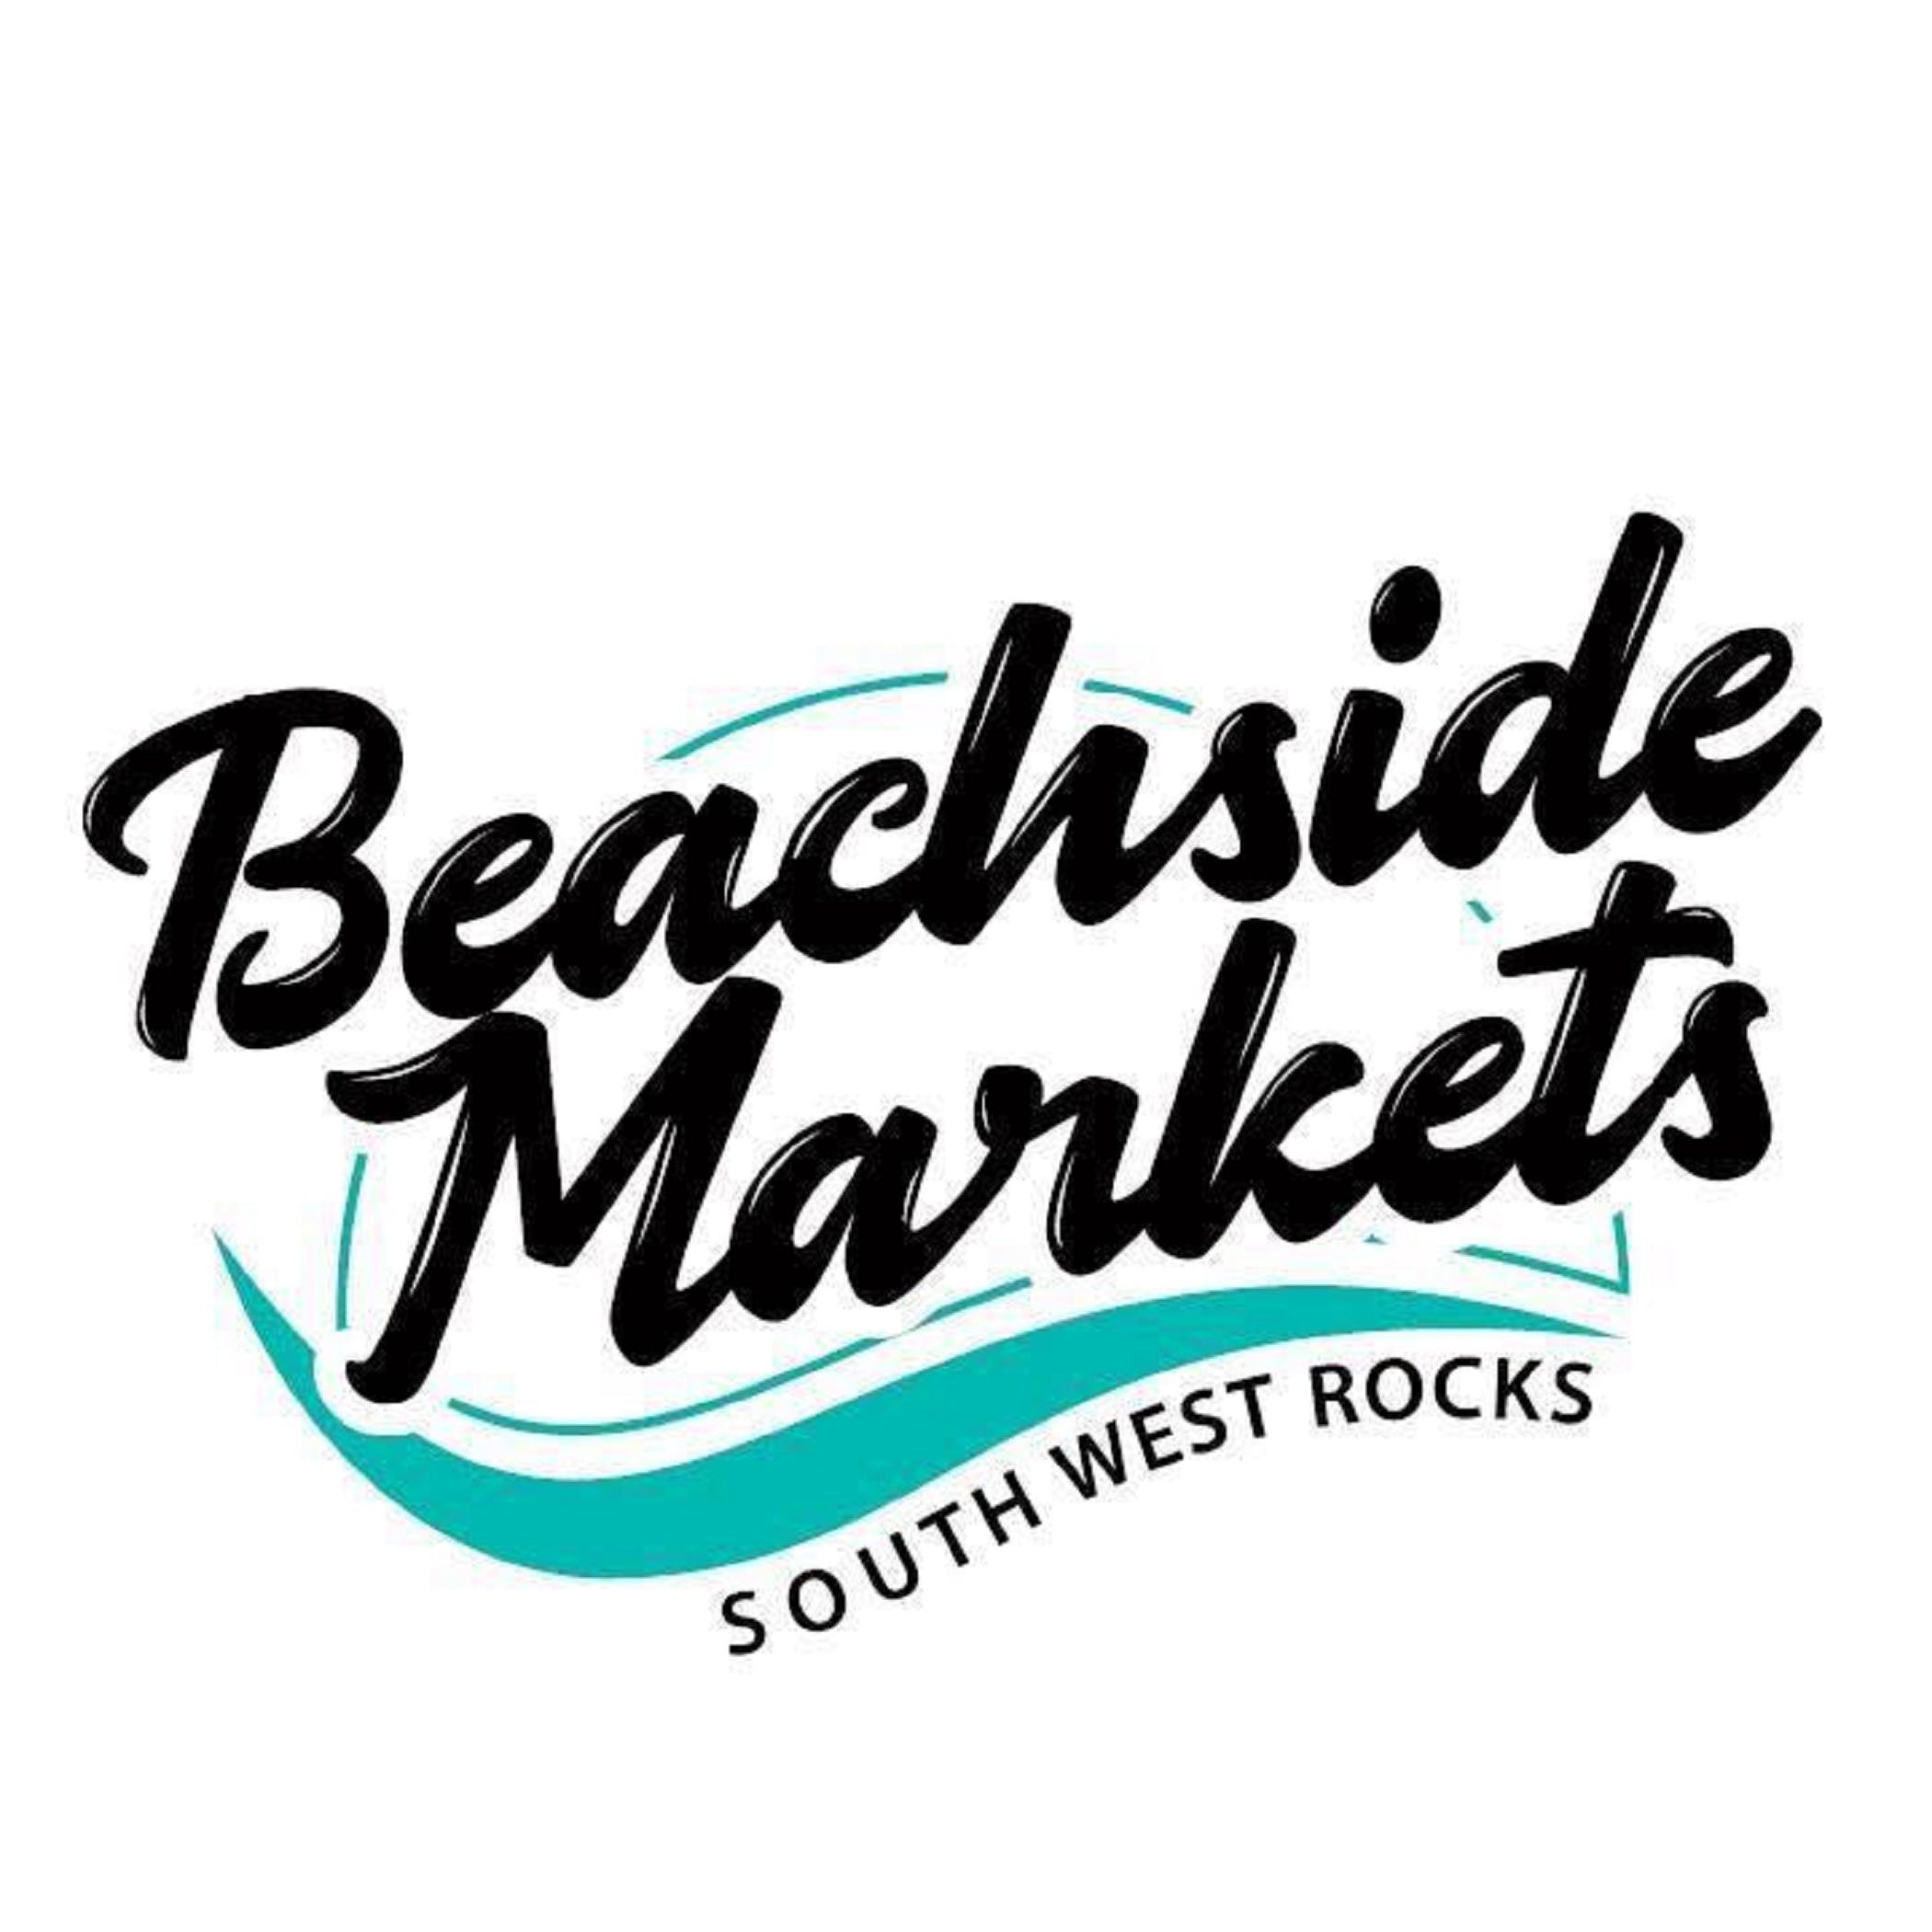 Beachside Markets South West Rocks - eAccommodation